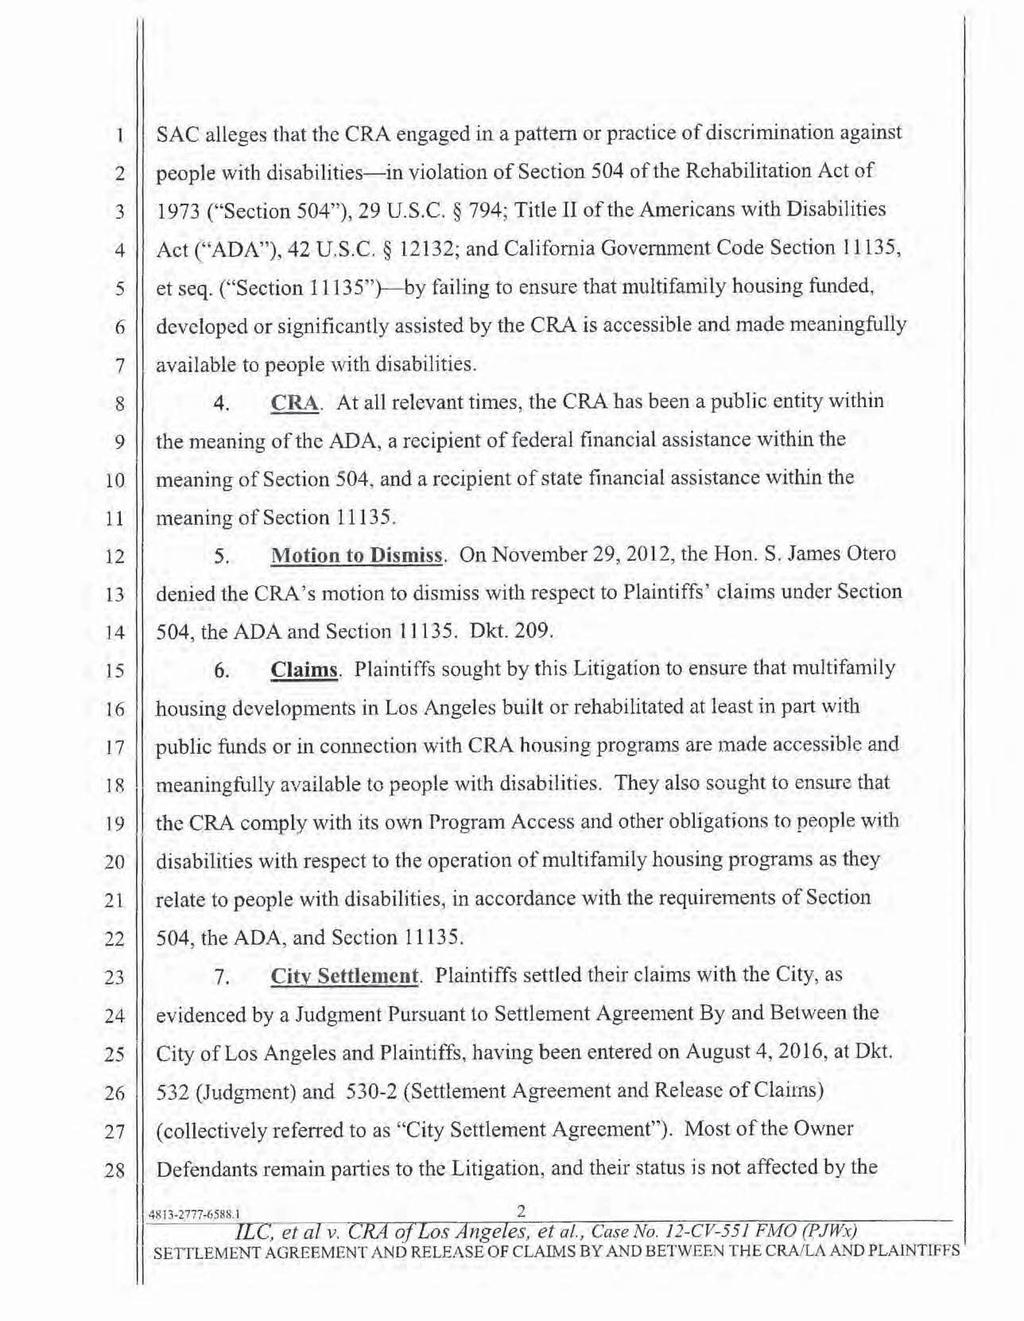 Case 2:12-cv-00551-FMO-PJW Document 596